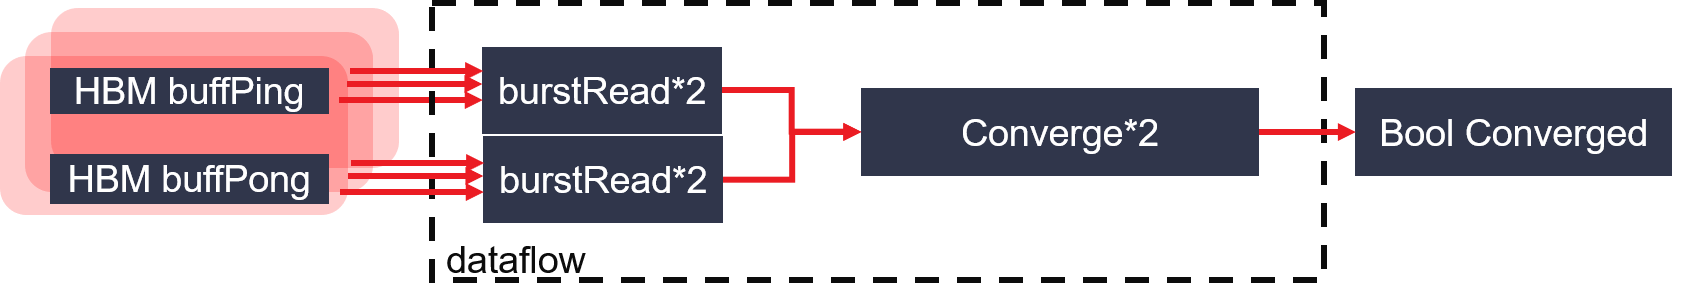 Figure 4 PageRankMultiChannels calConvrgence architecture on FPGA